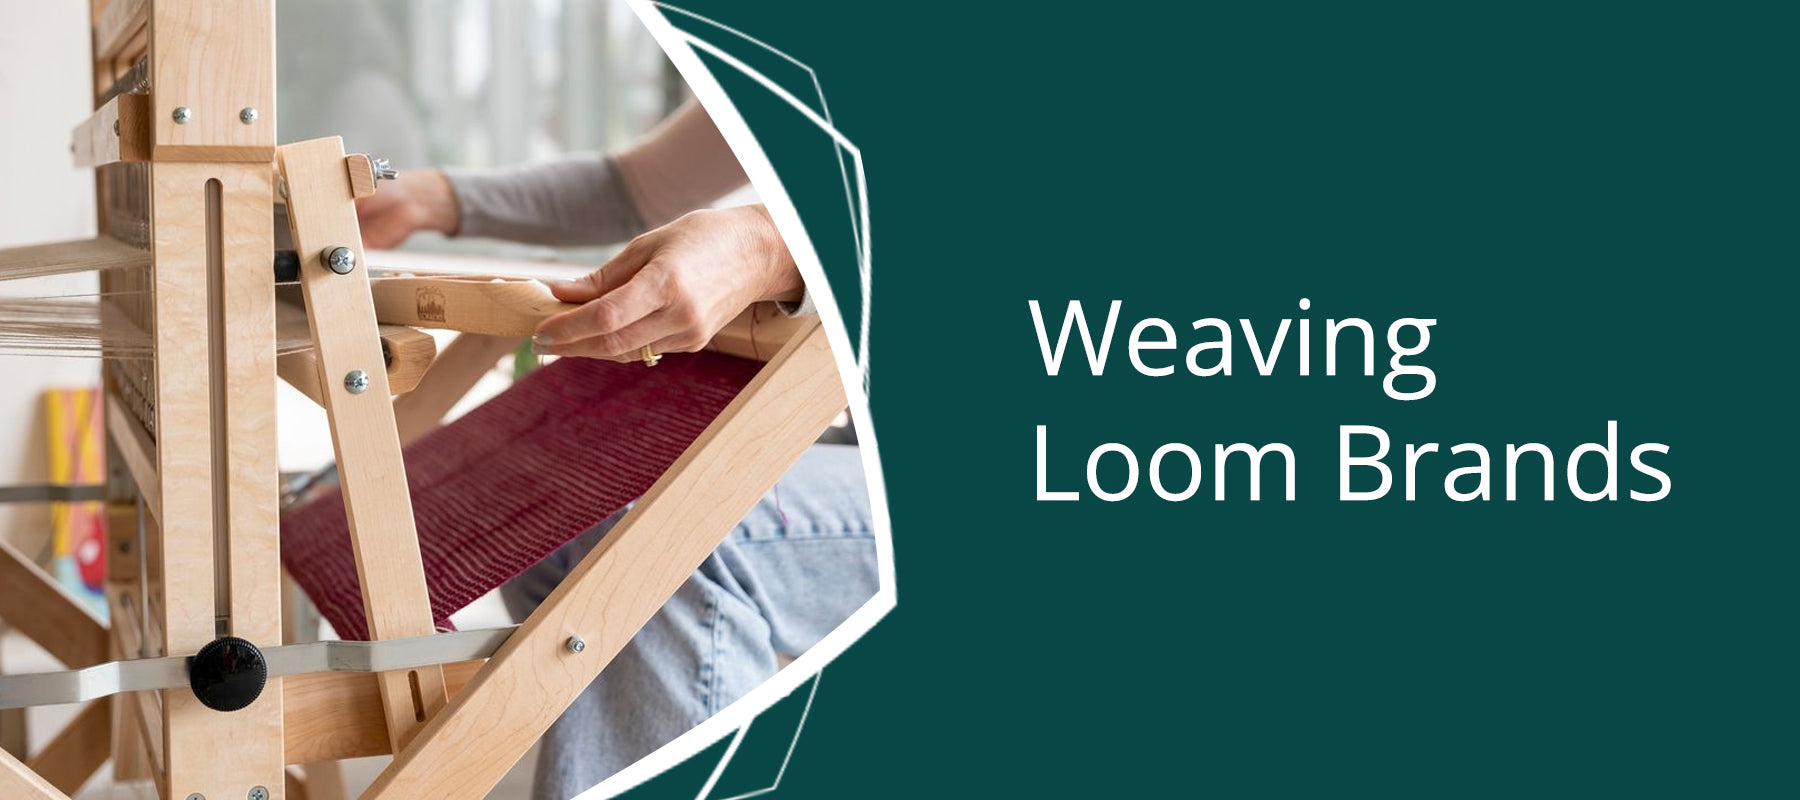 Weaving Loom Brands - Thread Collective Australia